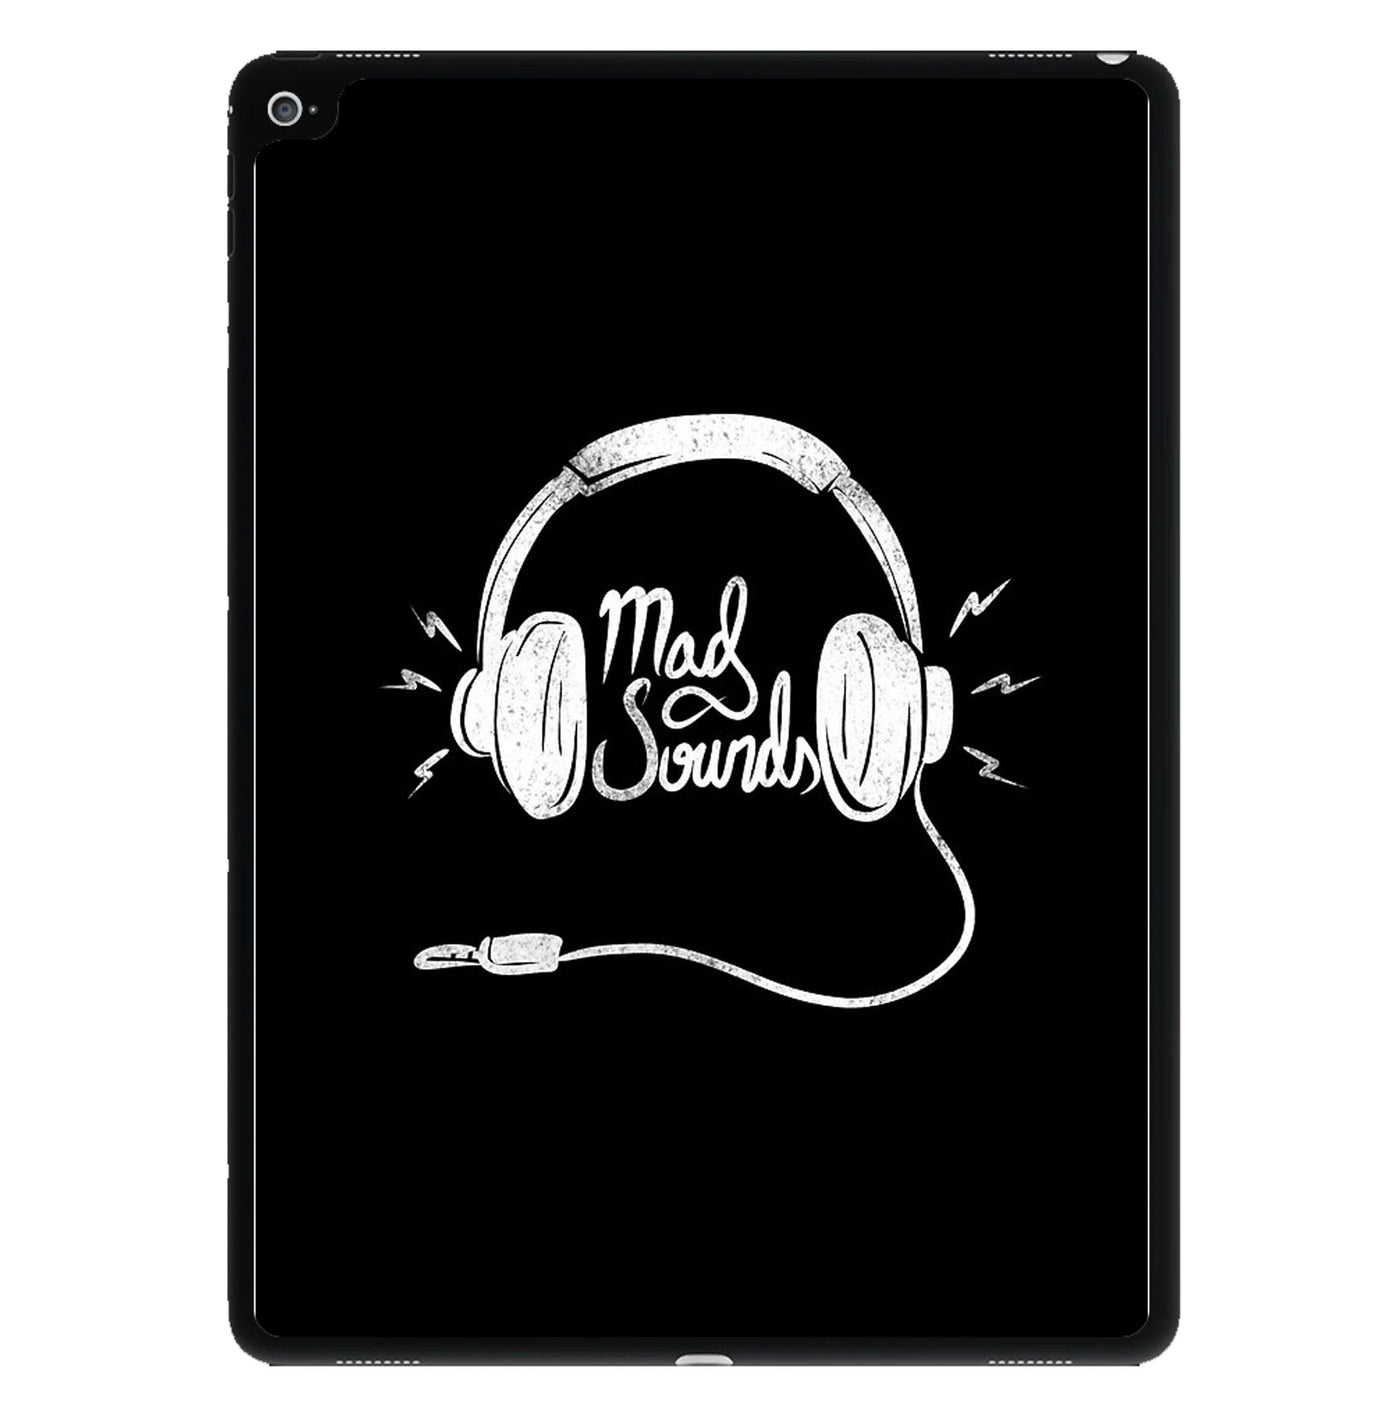 Mad Sounds - Arctic Monkeys iPad Case